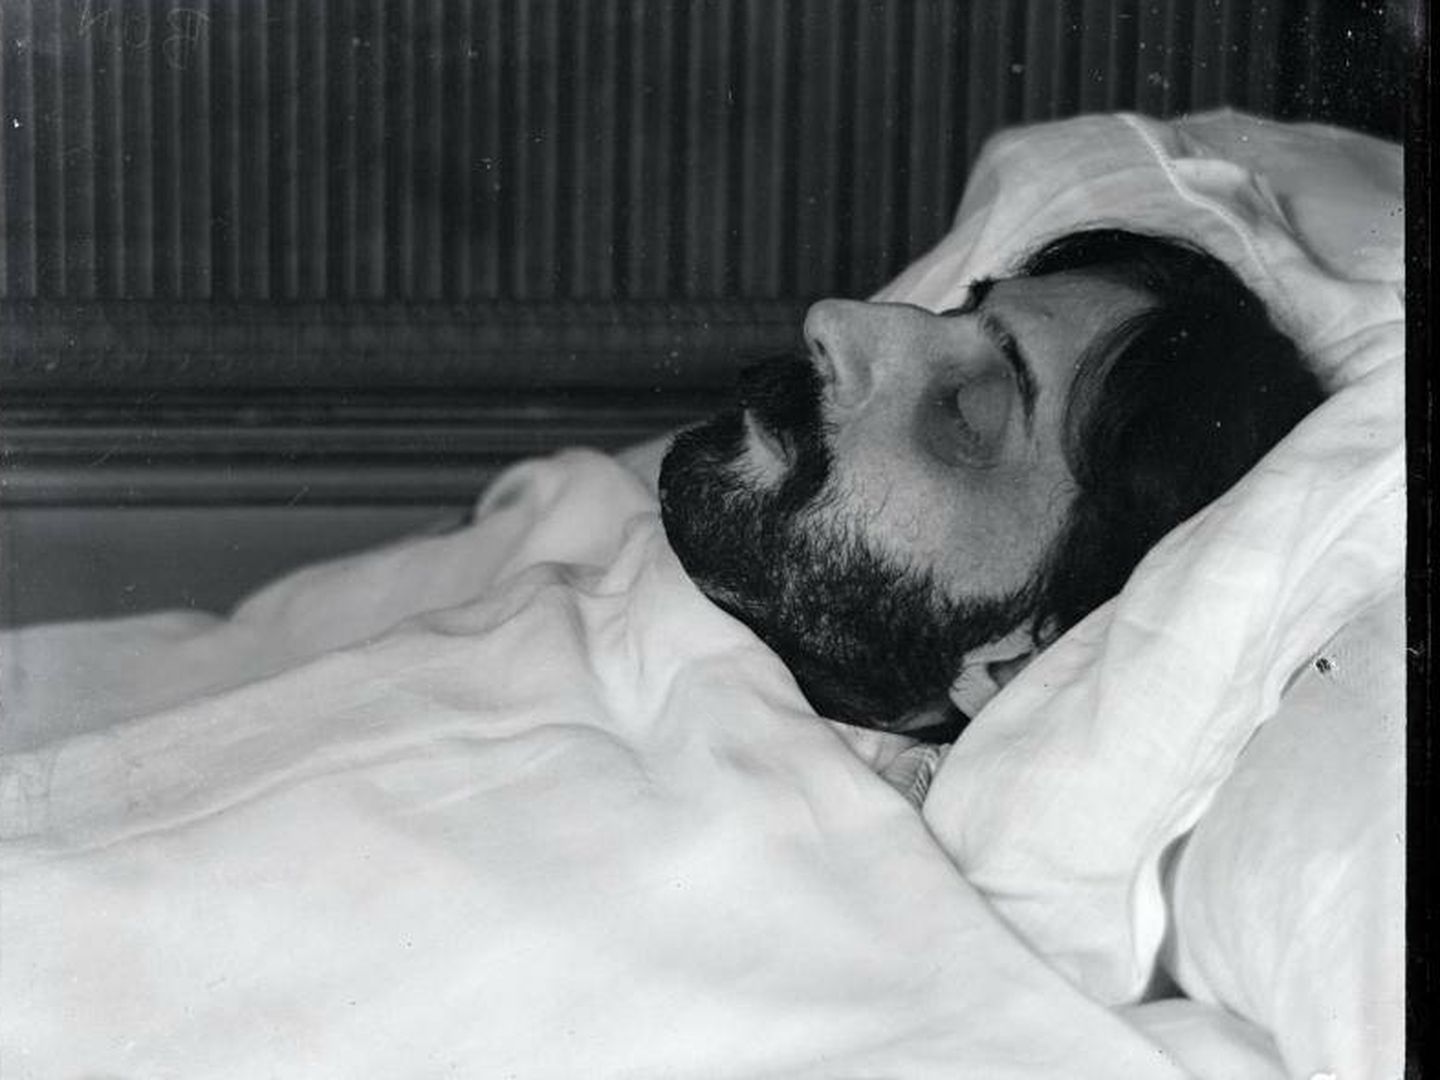 La famosa foto del cadáver de Proust hecha por Man Ray.